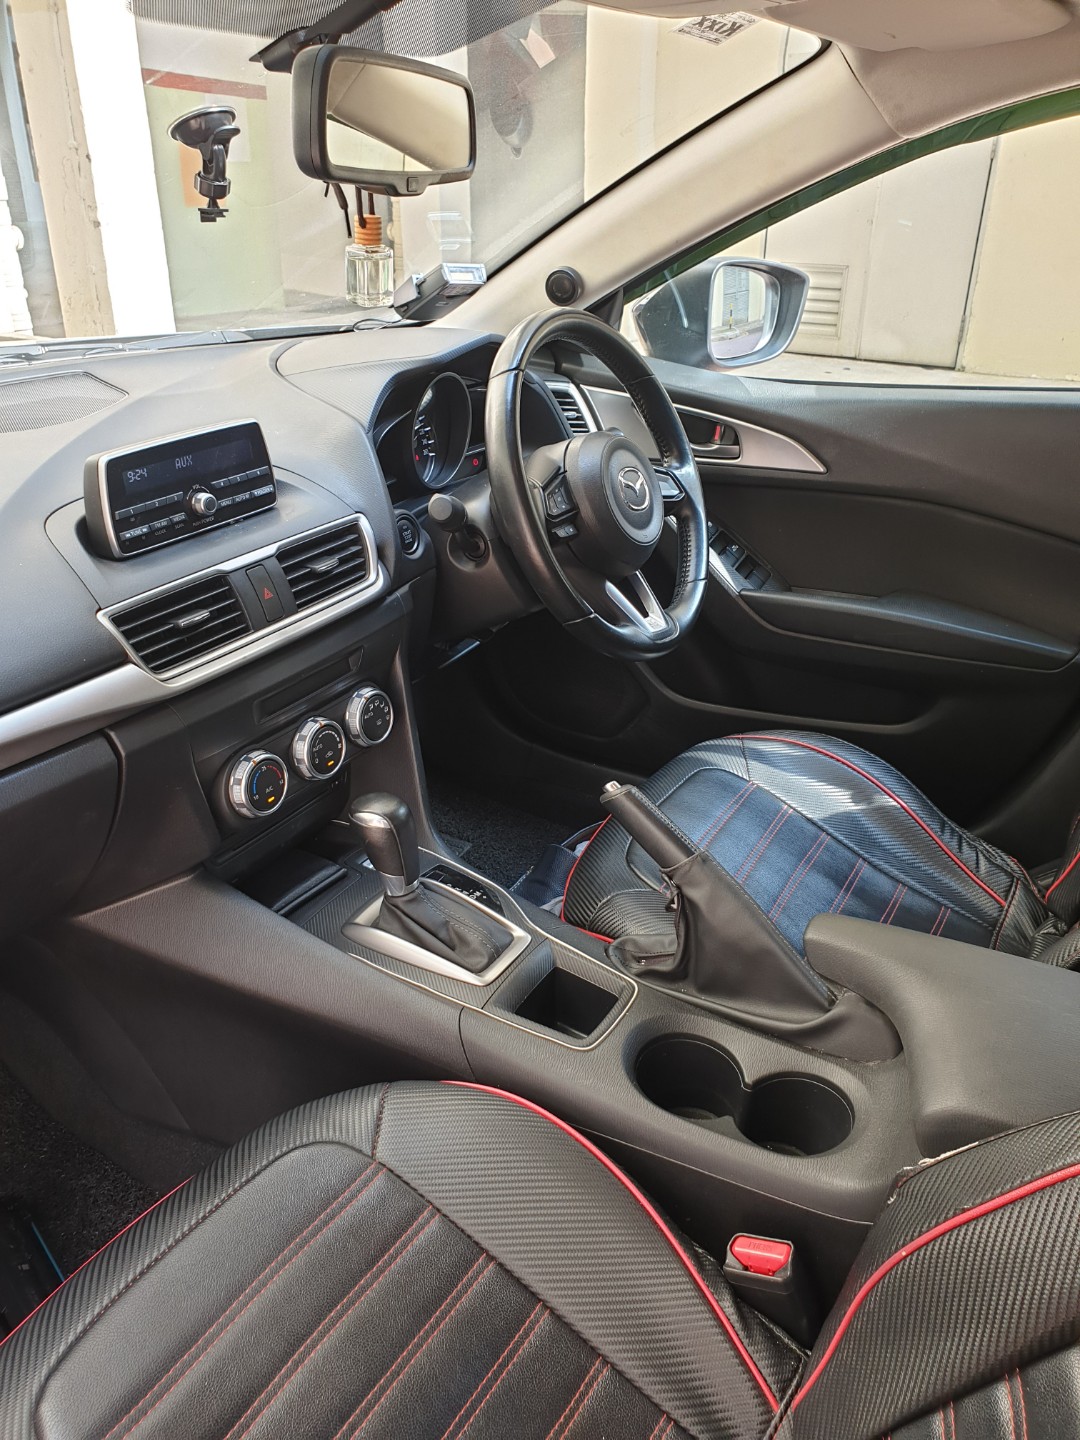 Cheap car rental (Mazda 3)